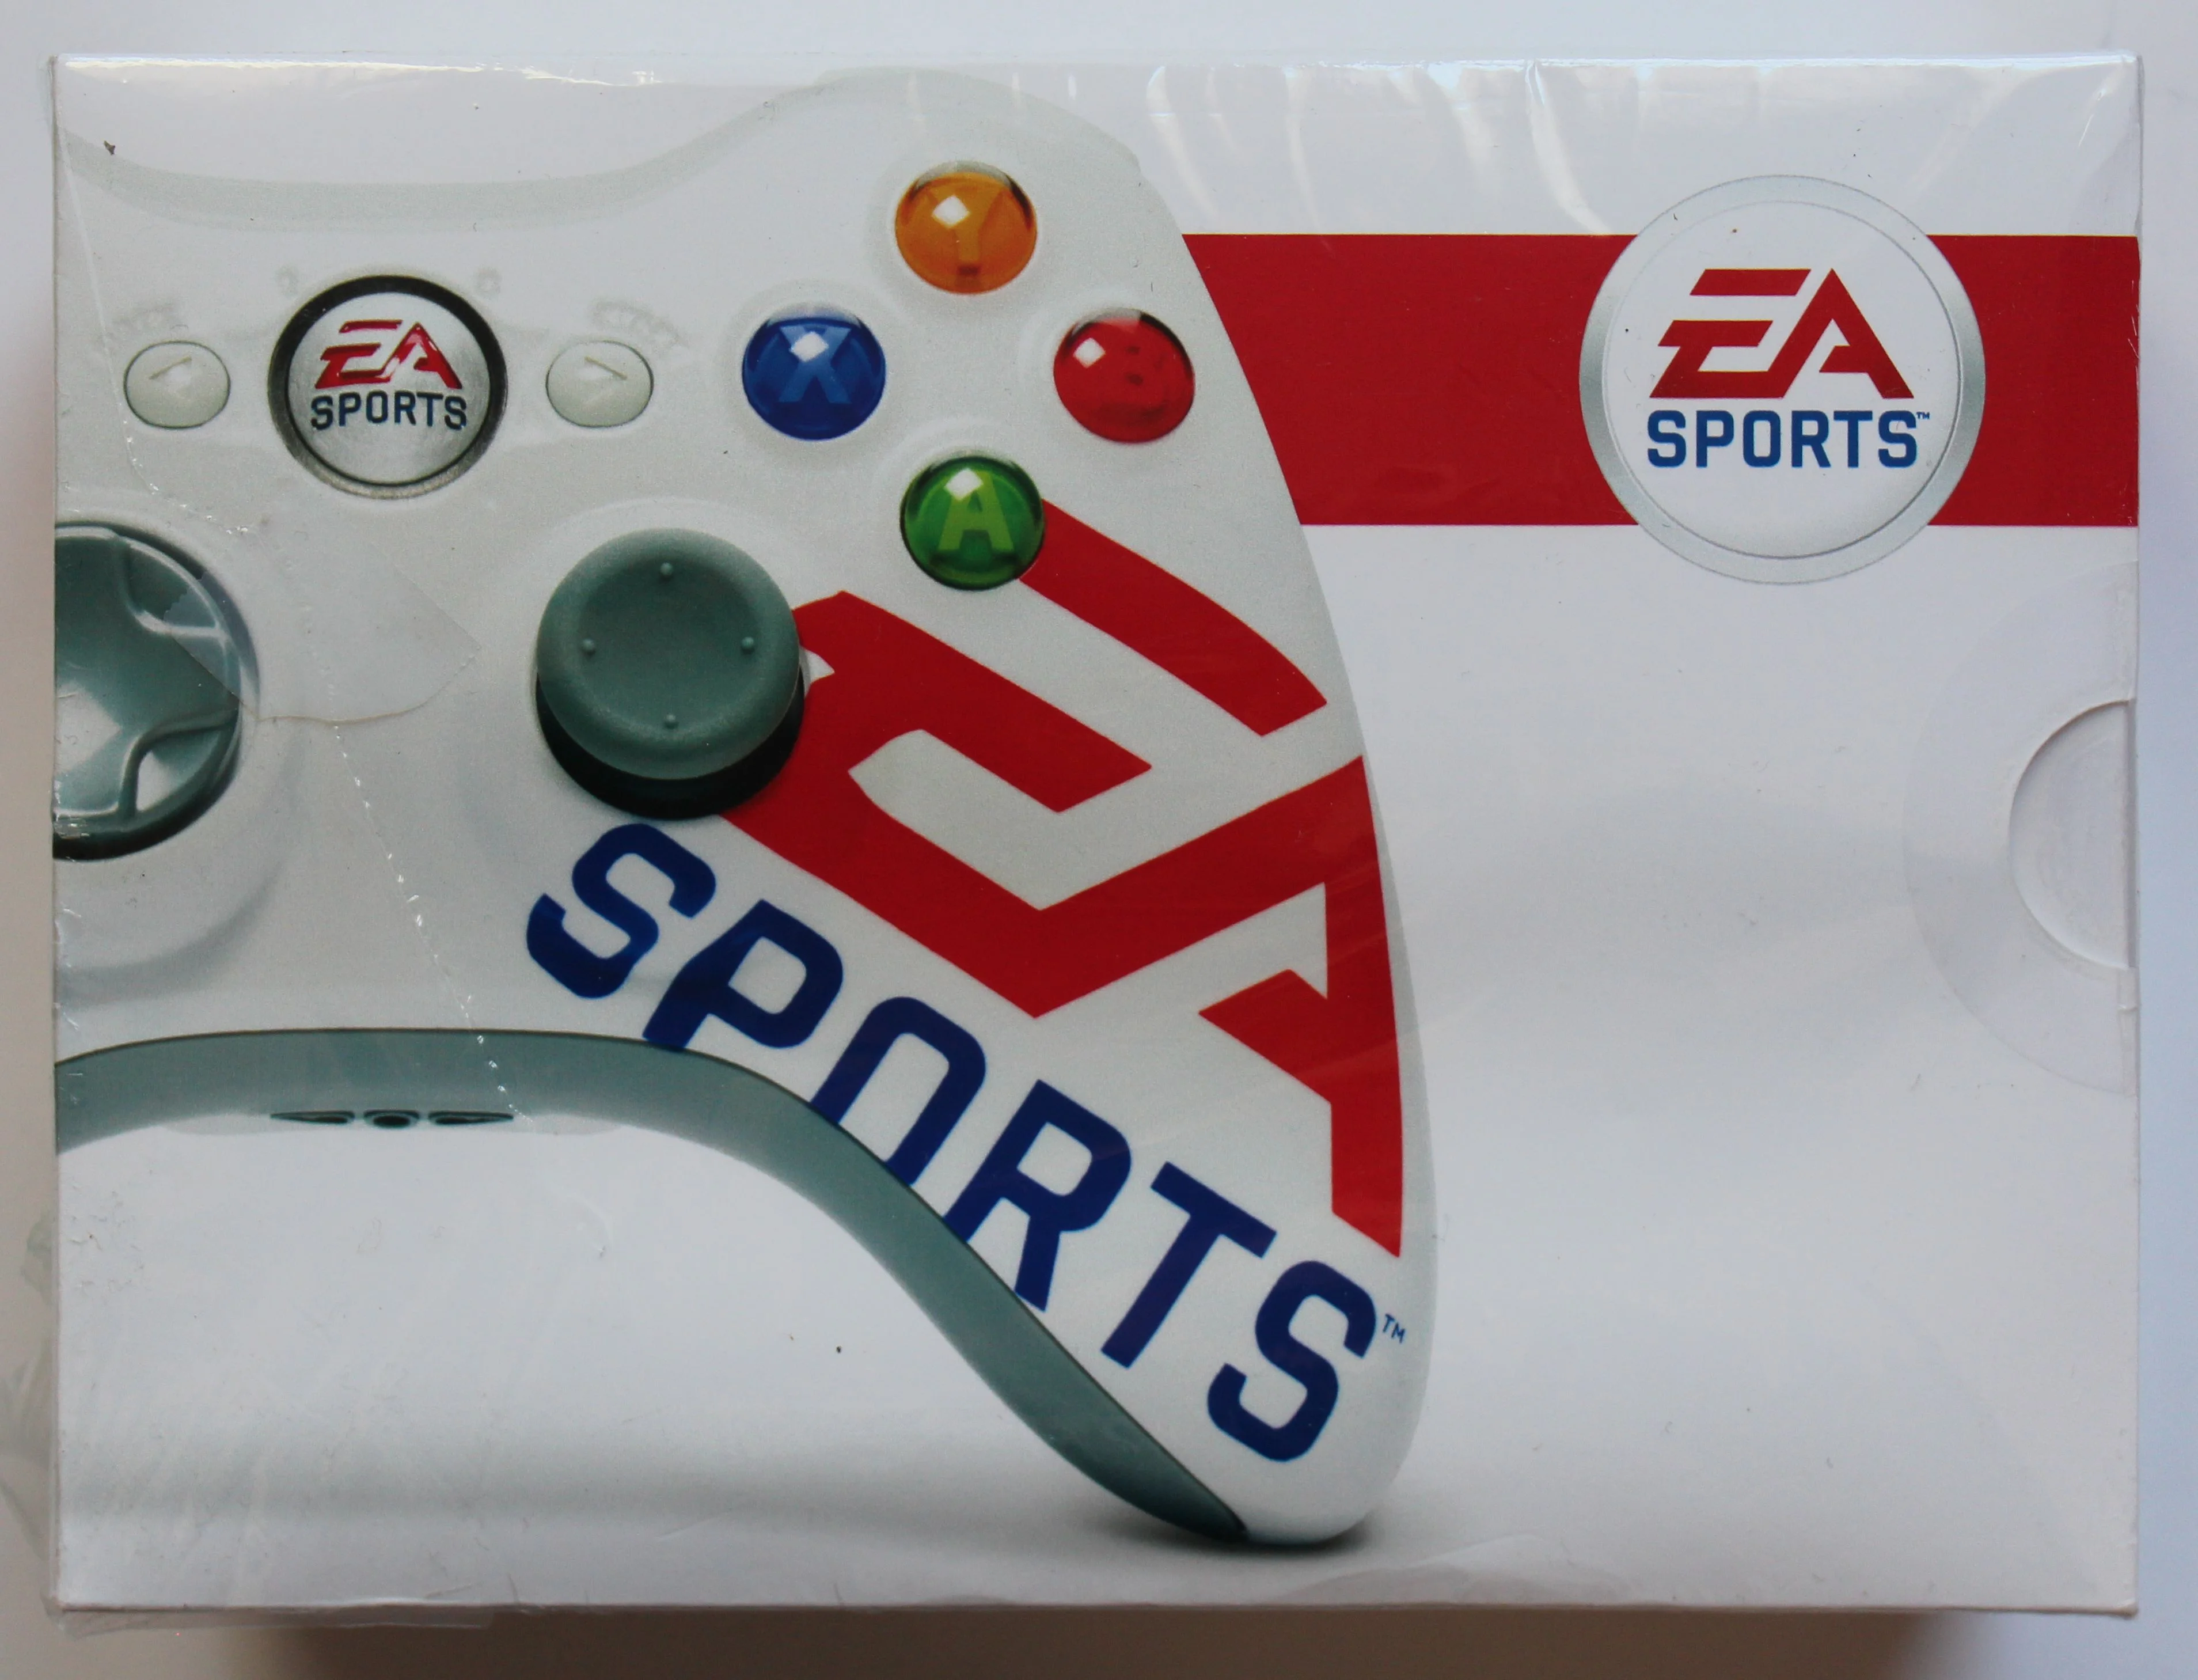  Microsoft Xbox 360 EA Sports Employee Promotional Controller